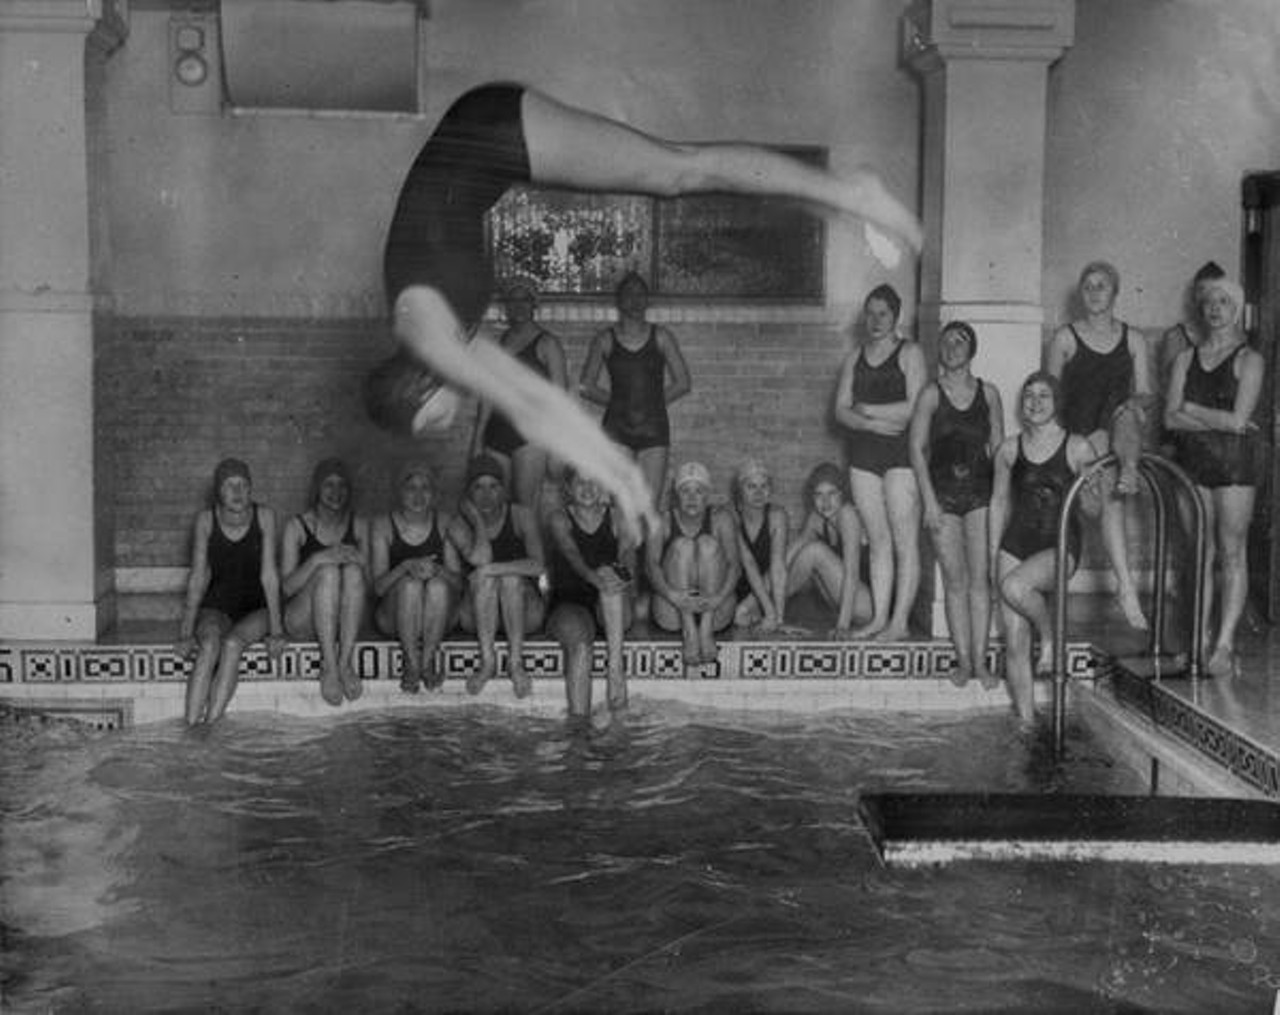  Shaw High School Diving Team, 1937 